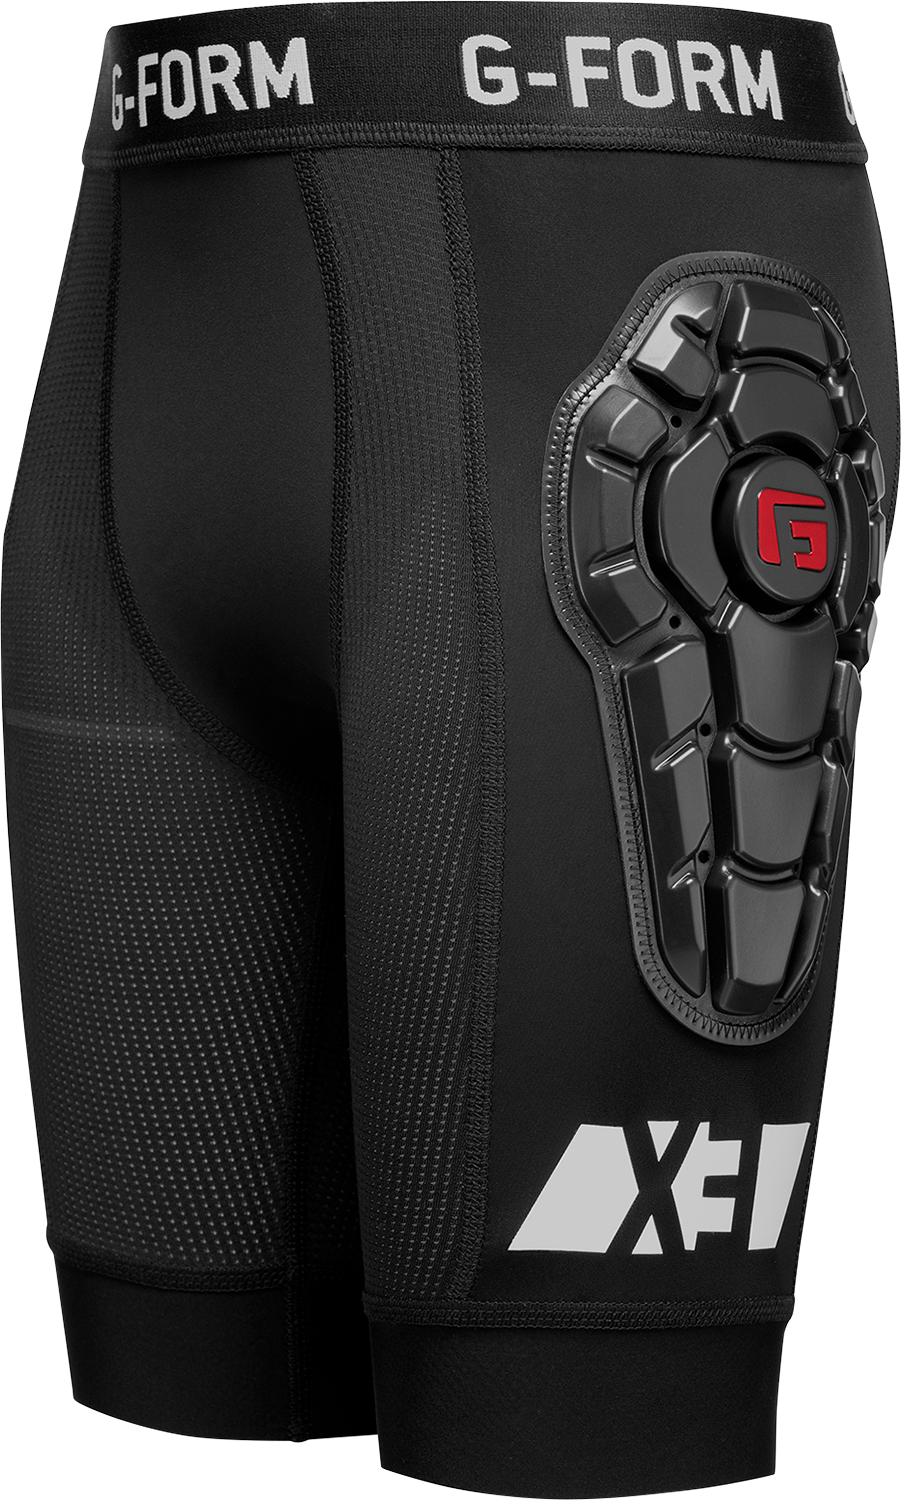 Protector para bicicleta G-FORM Pro-X3 - Negro - XL CS1102016 